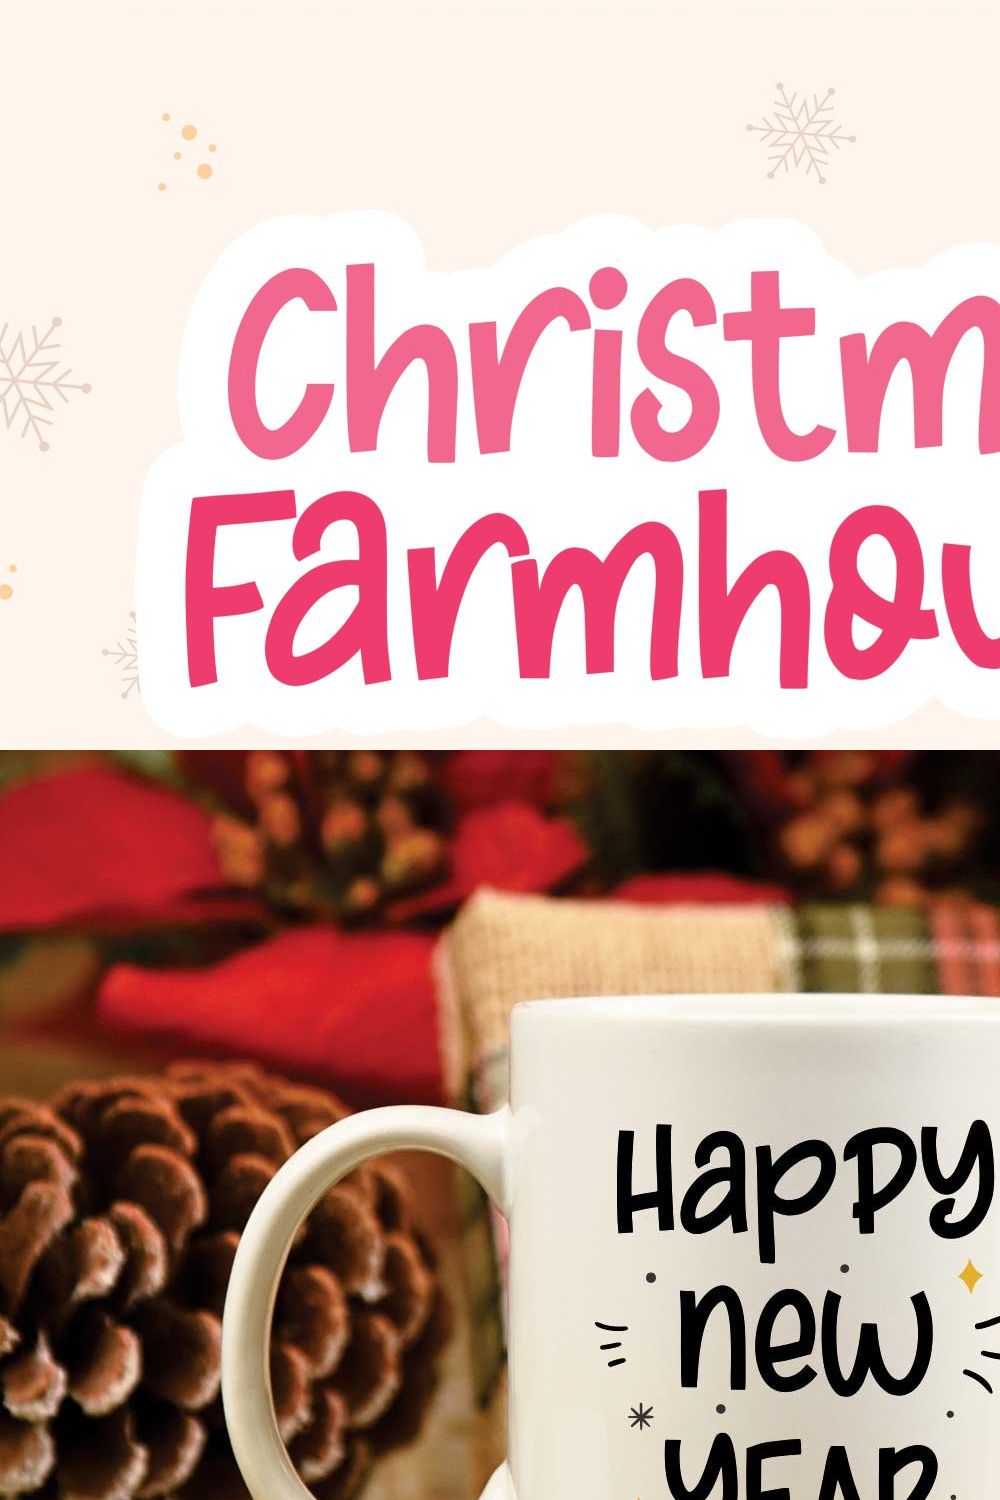 Christmas Farmhouse pinterest preview image.